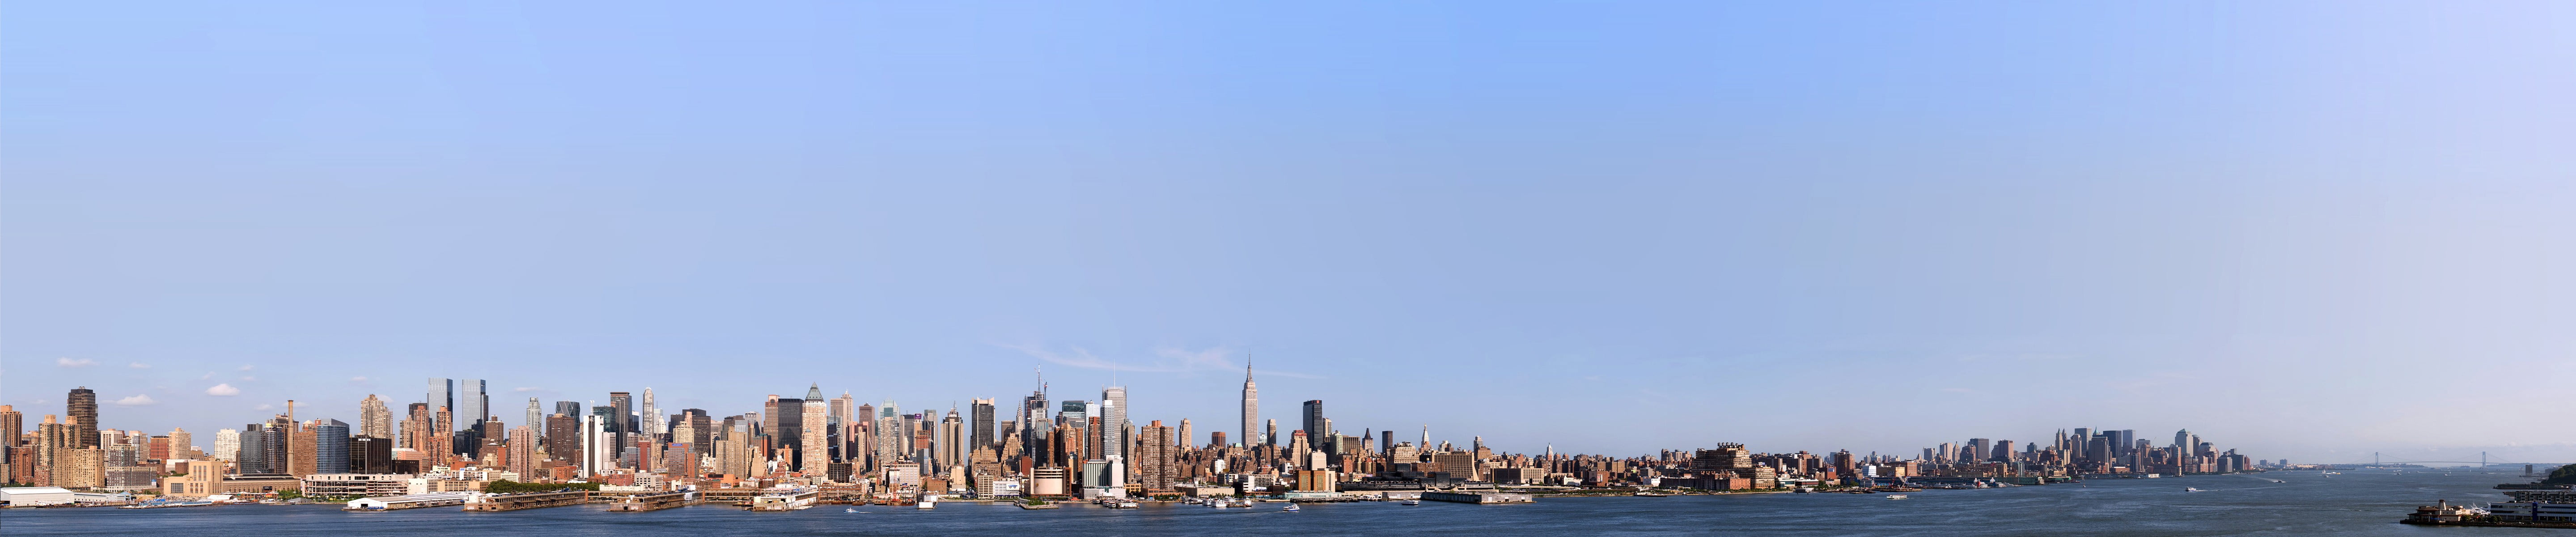 cityscape, New York City, triple screen, wide angle, Manhattan